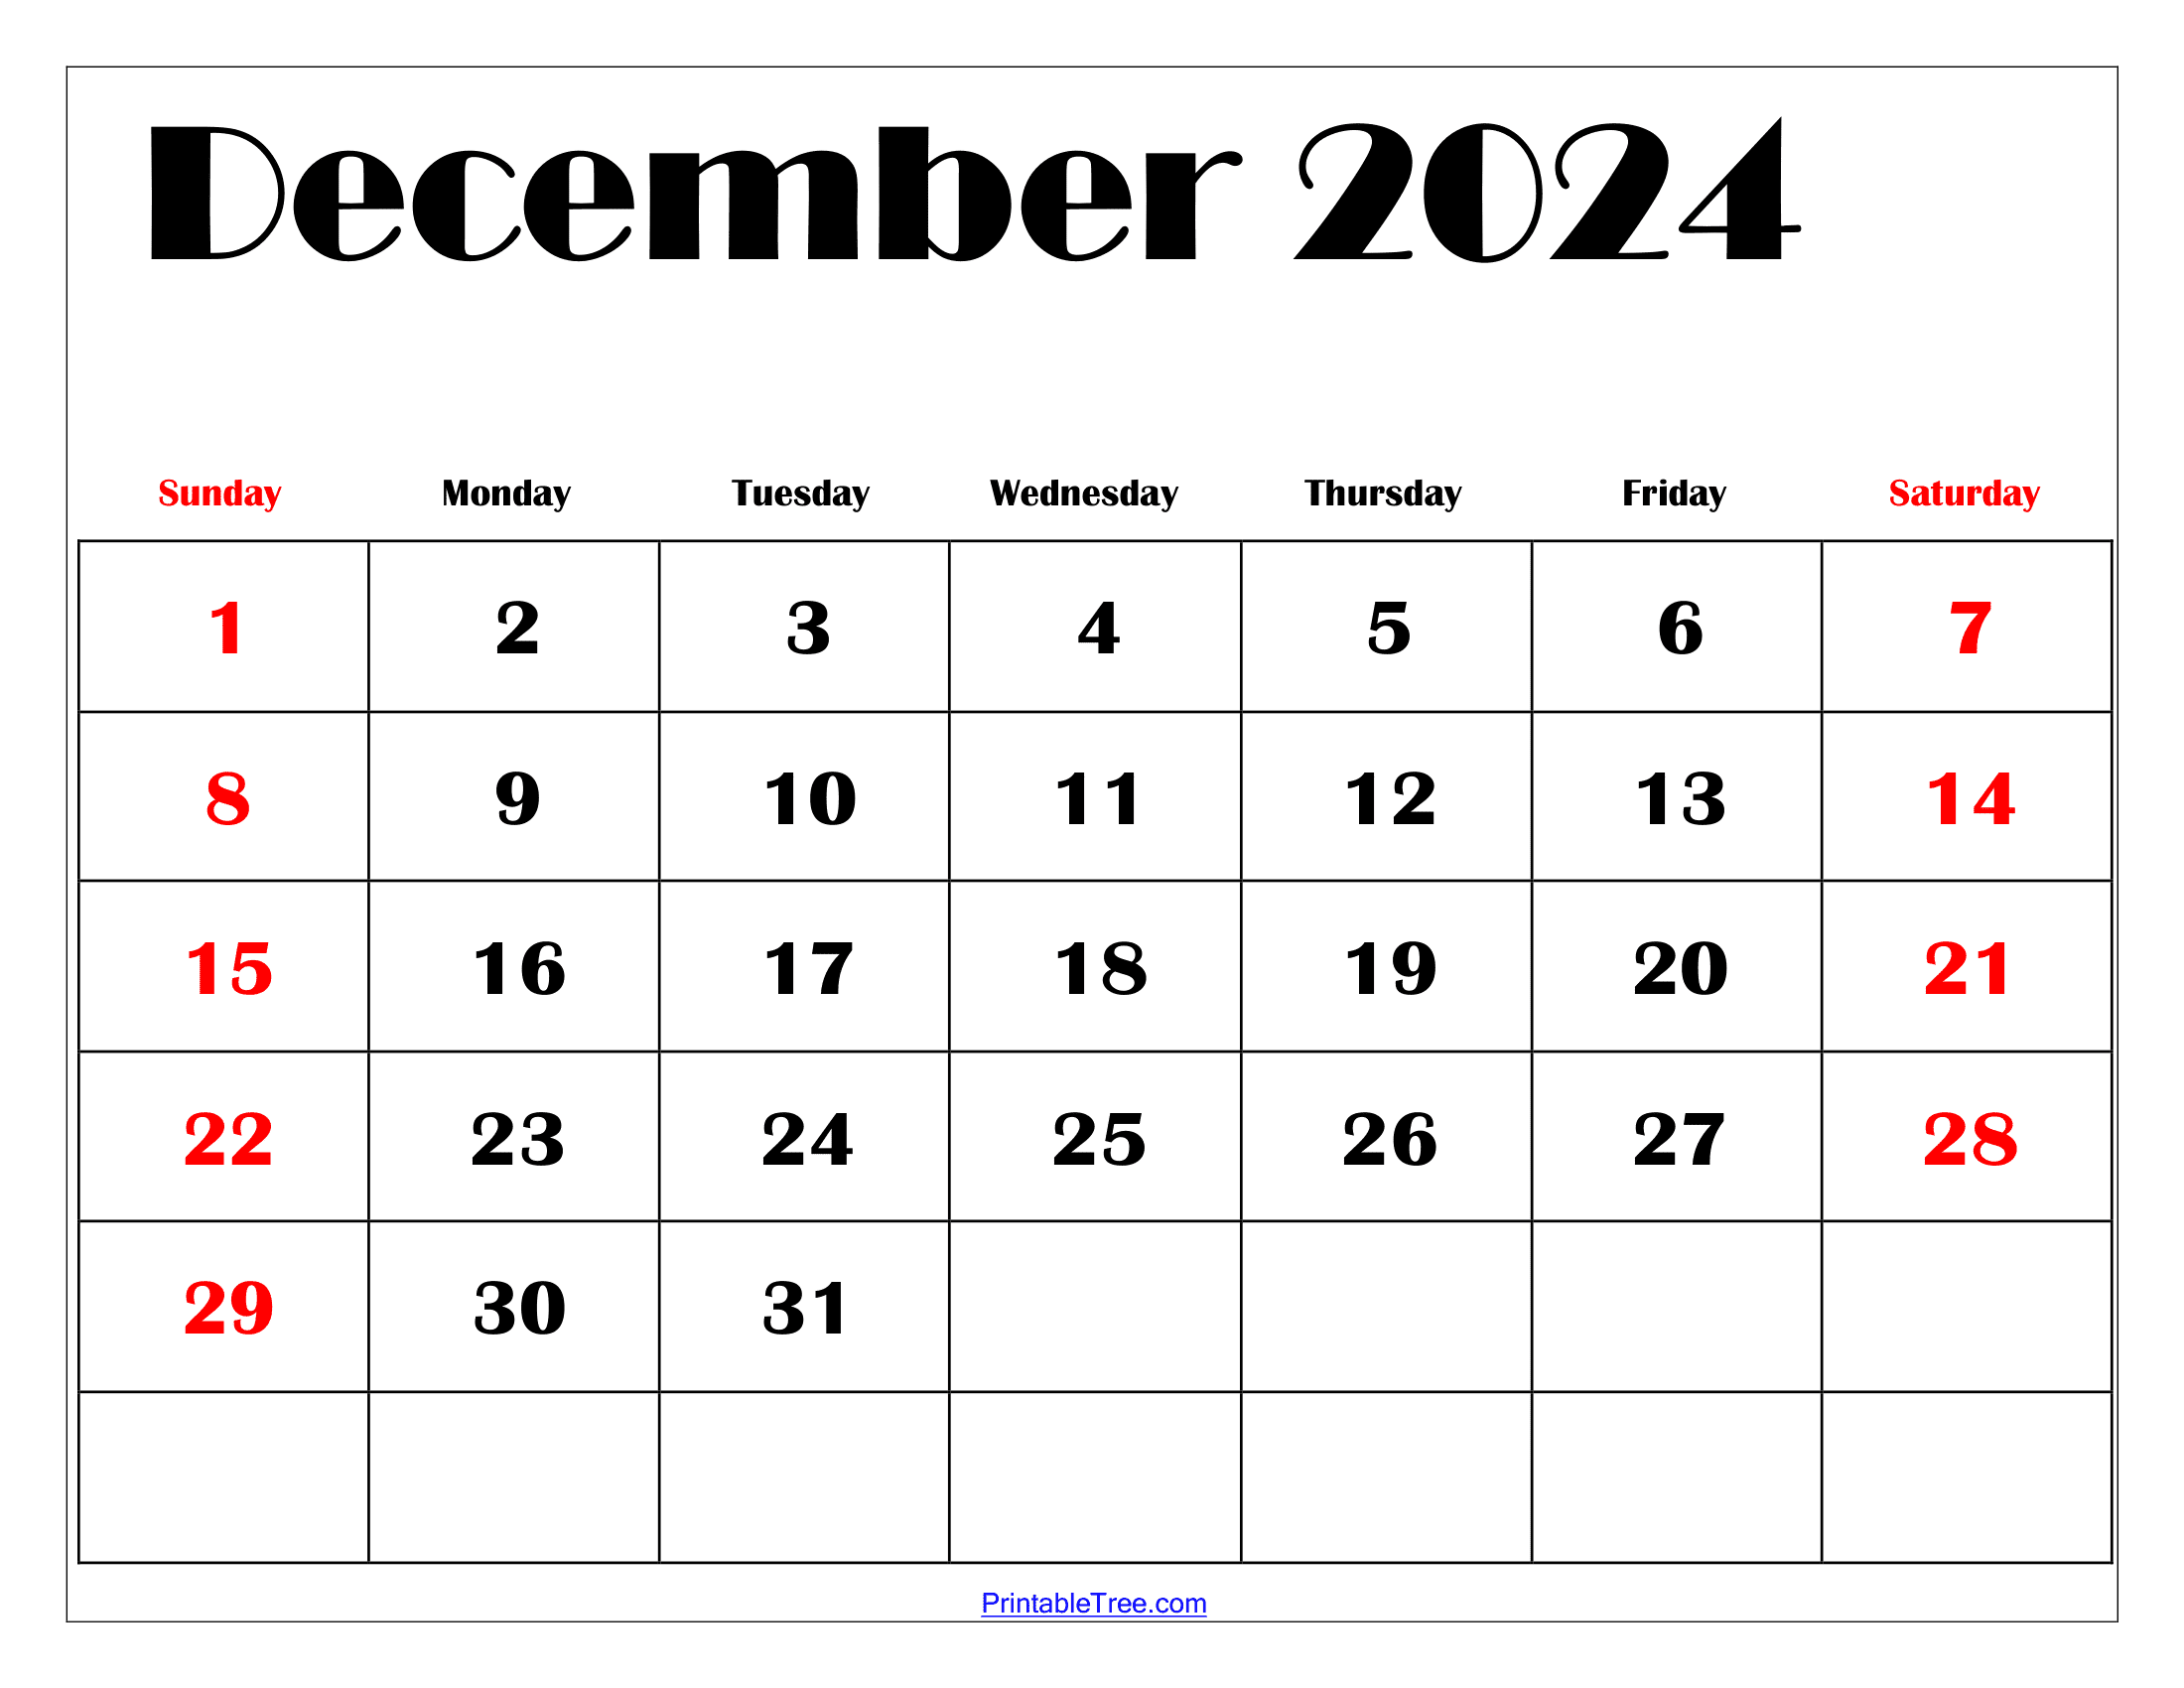 December 2024 Calendar Printable Pdf Blank Free Templates intended for Free Printable Blank Calendar December 2024